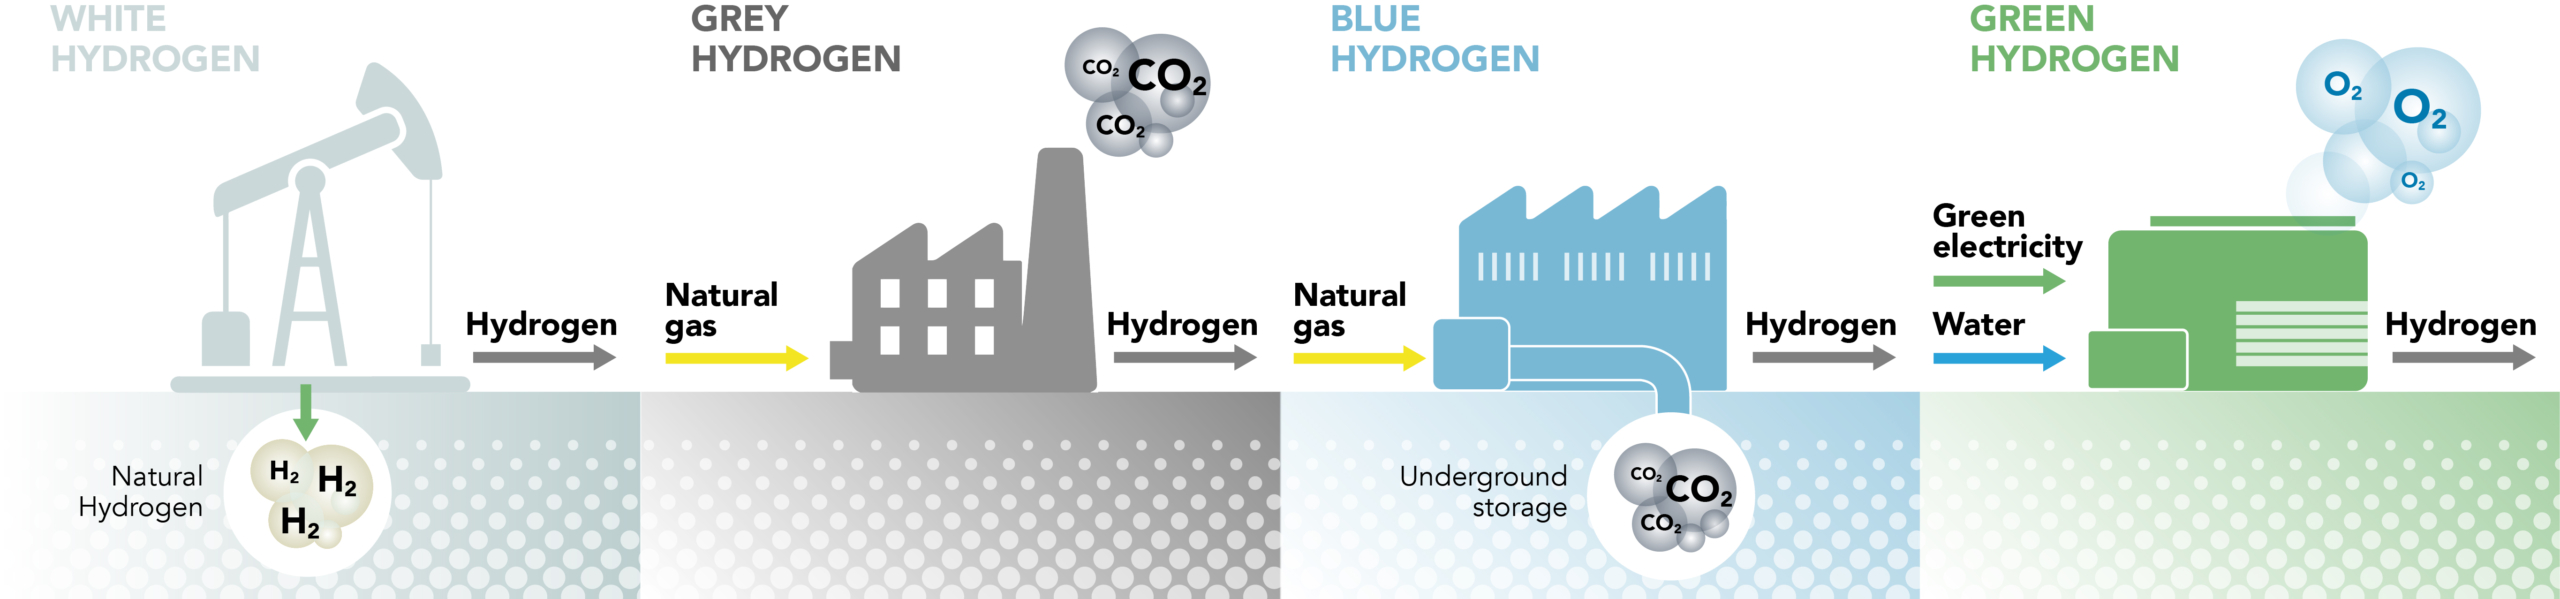 hydrogen production methods color classification